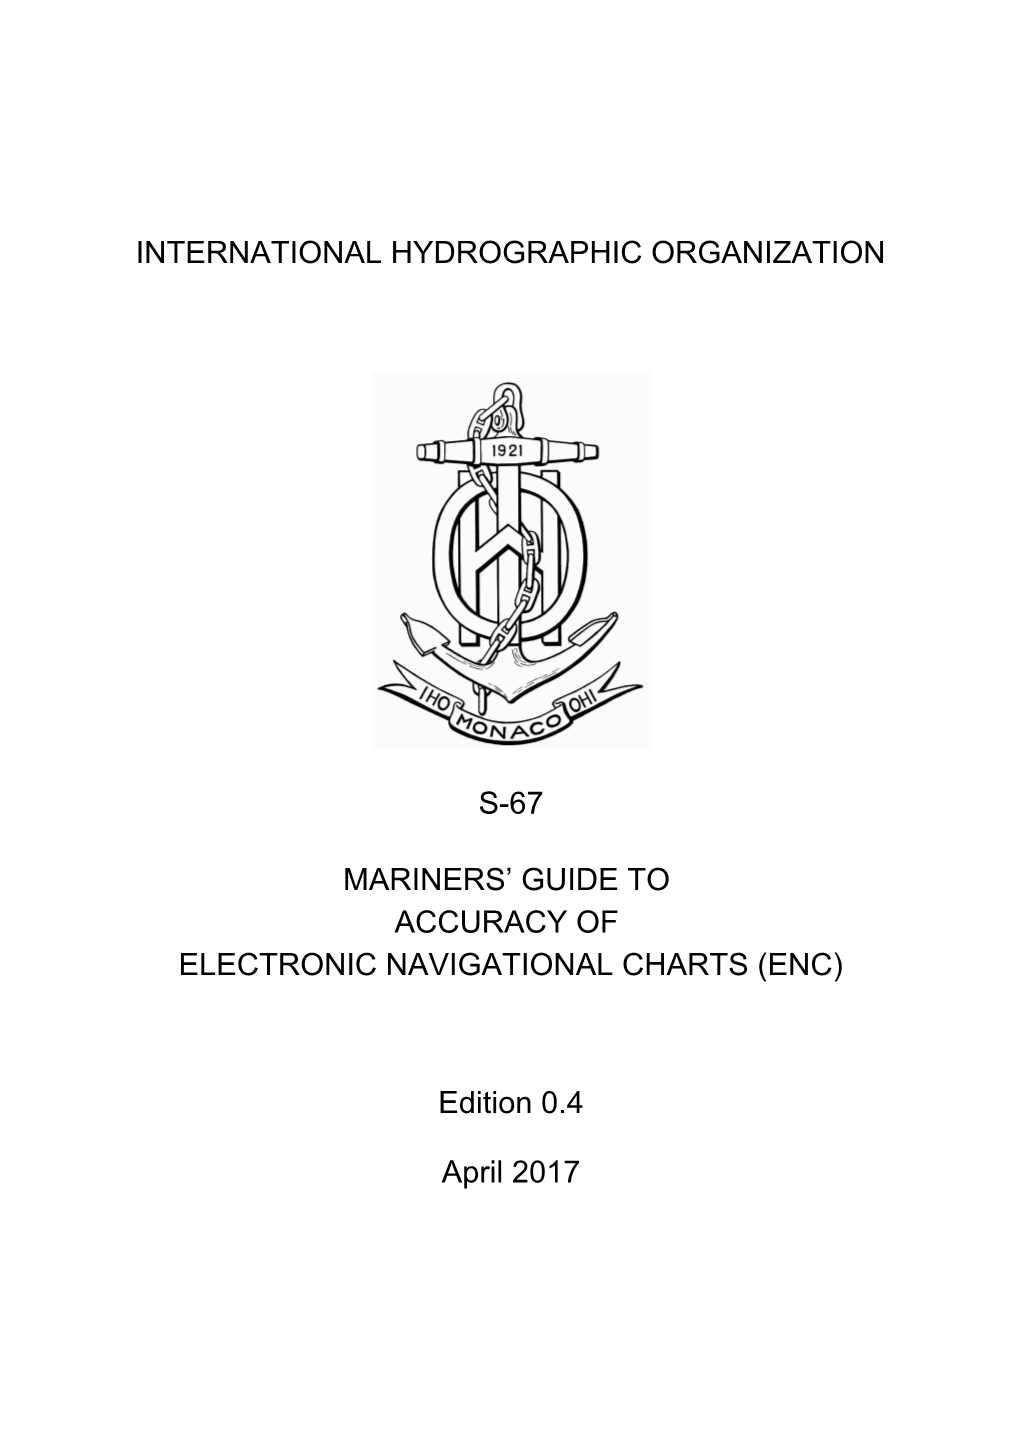 The International Hydrographic Organization